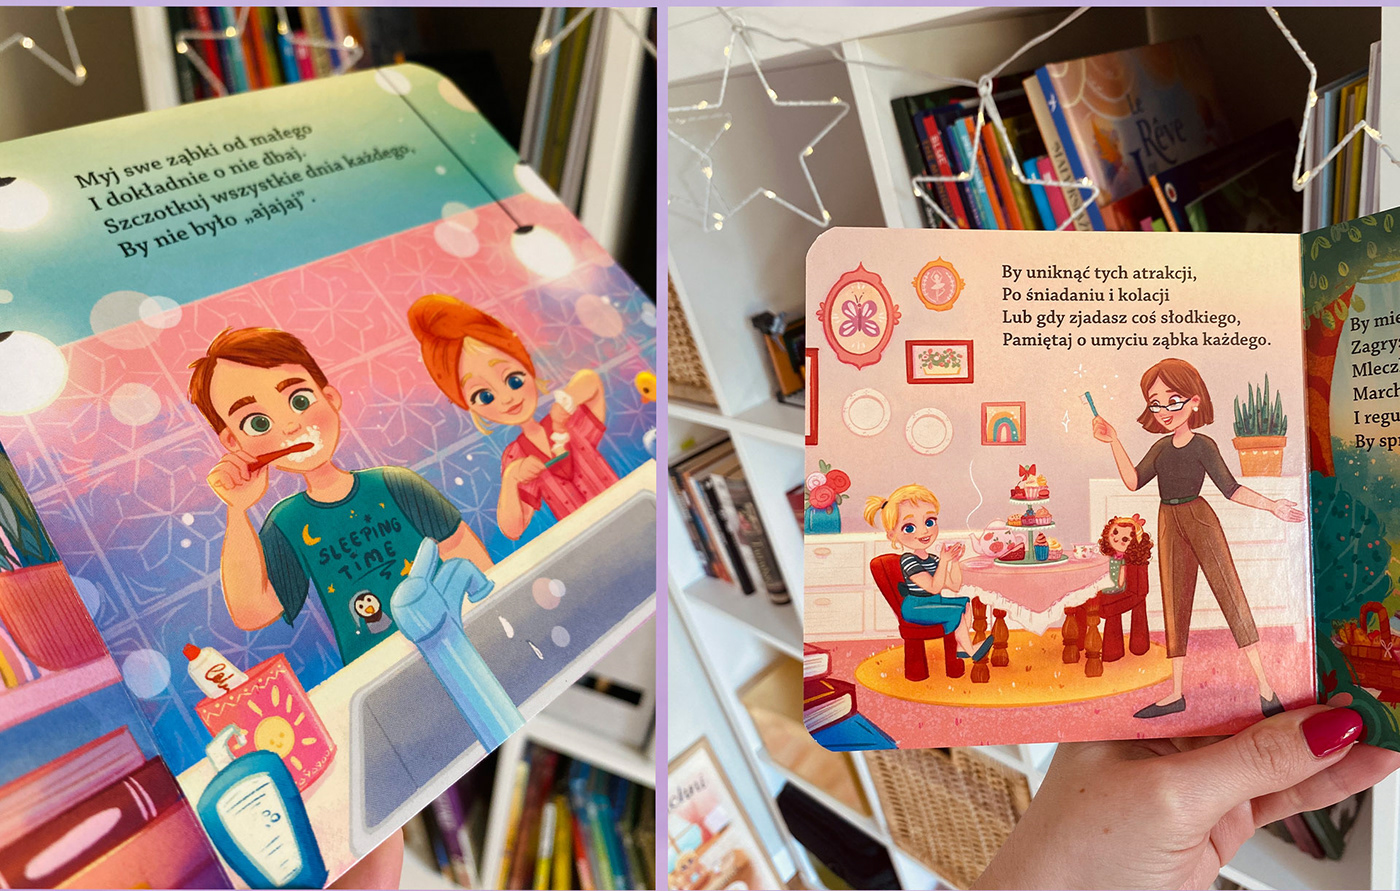 Picture book picturebook kidlit kidlitart children's book children illustration children book children's illustration childrens book